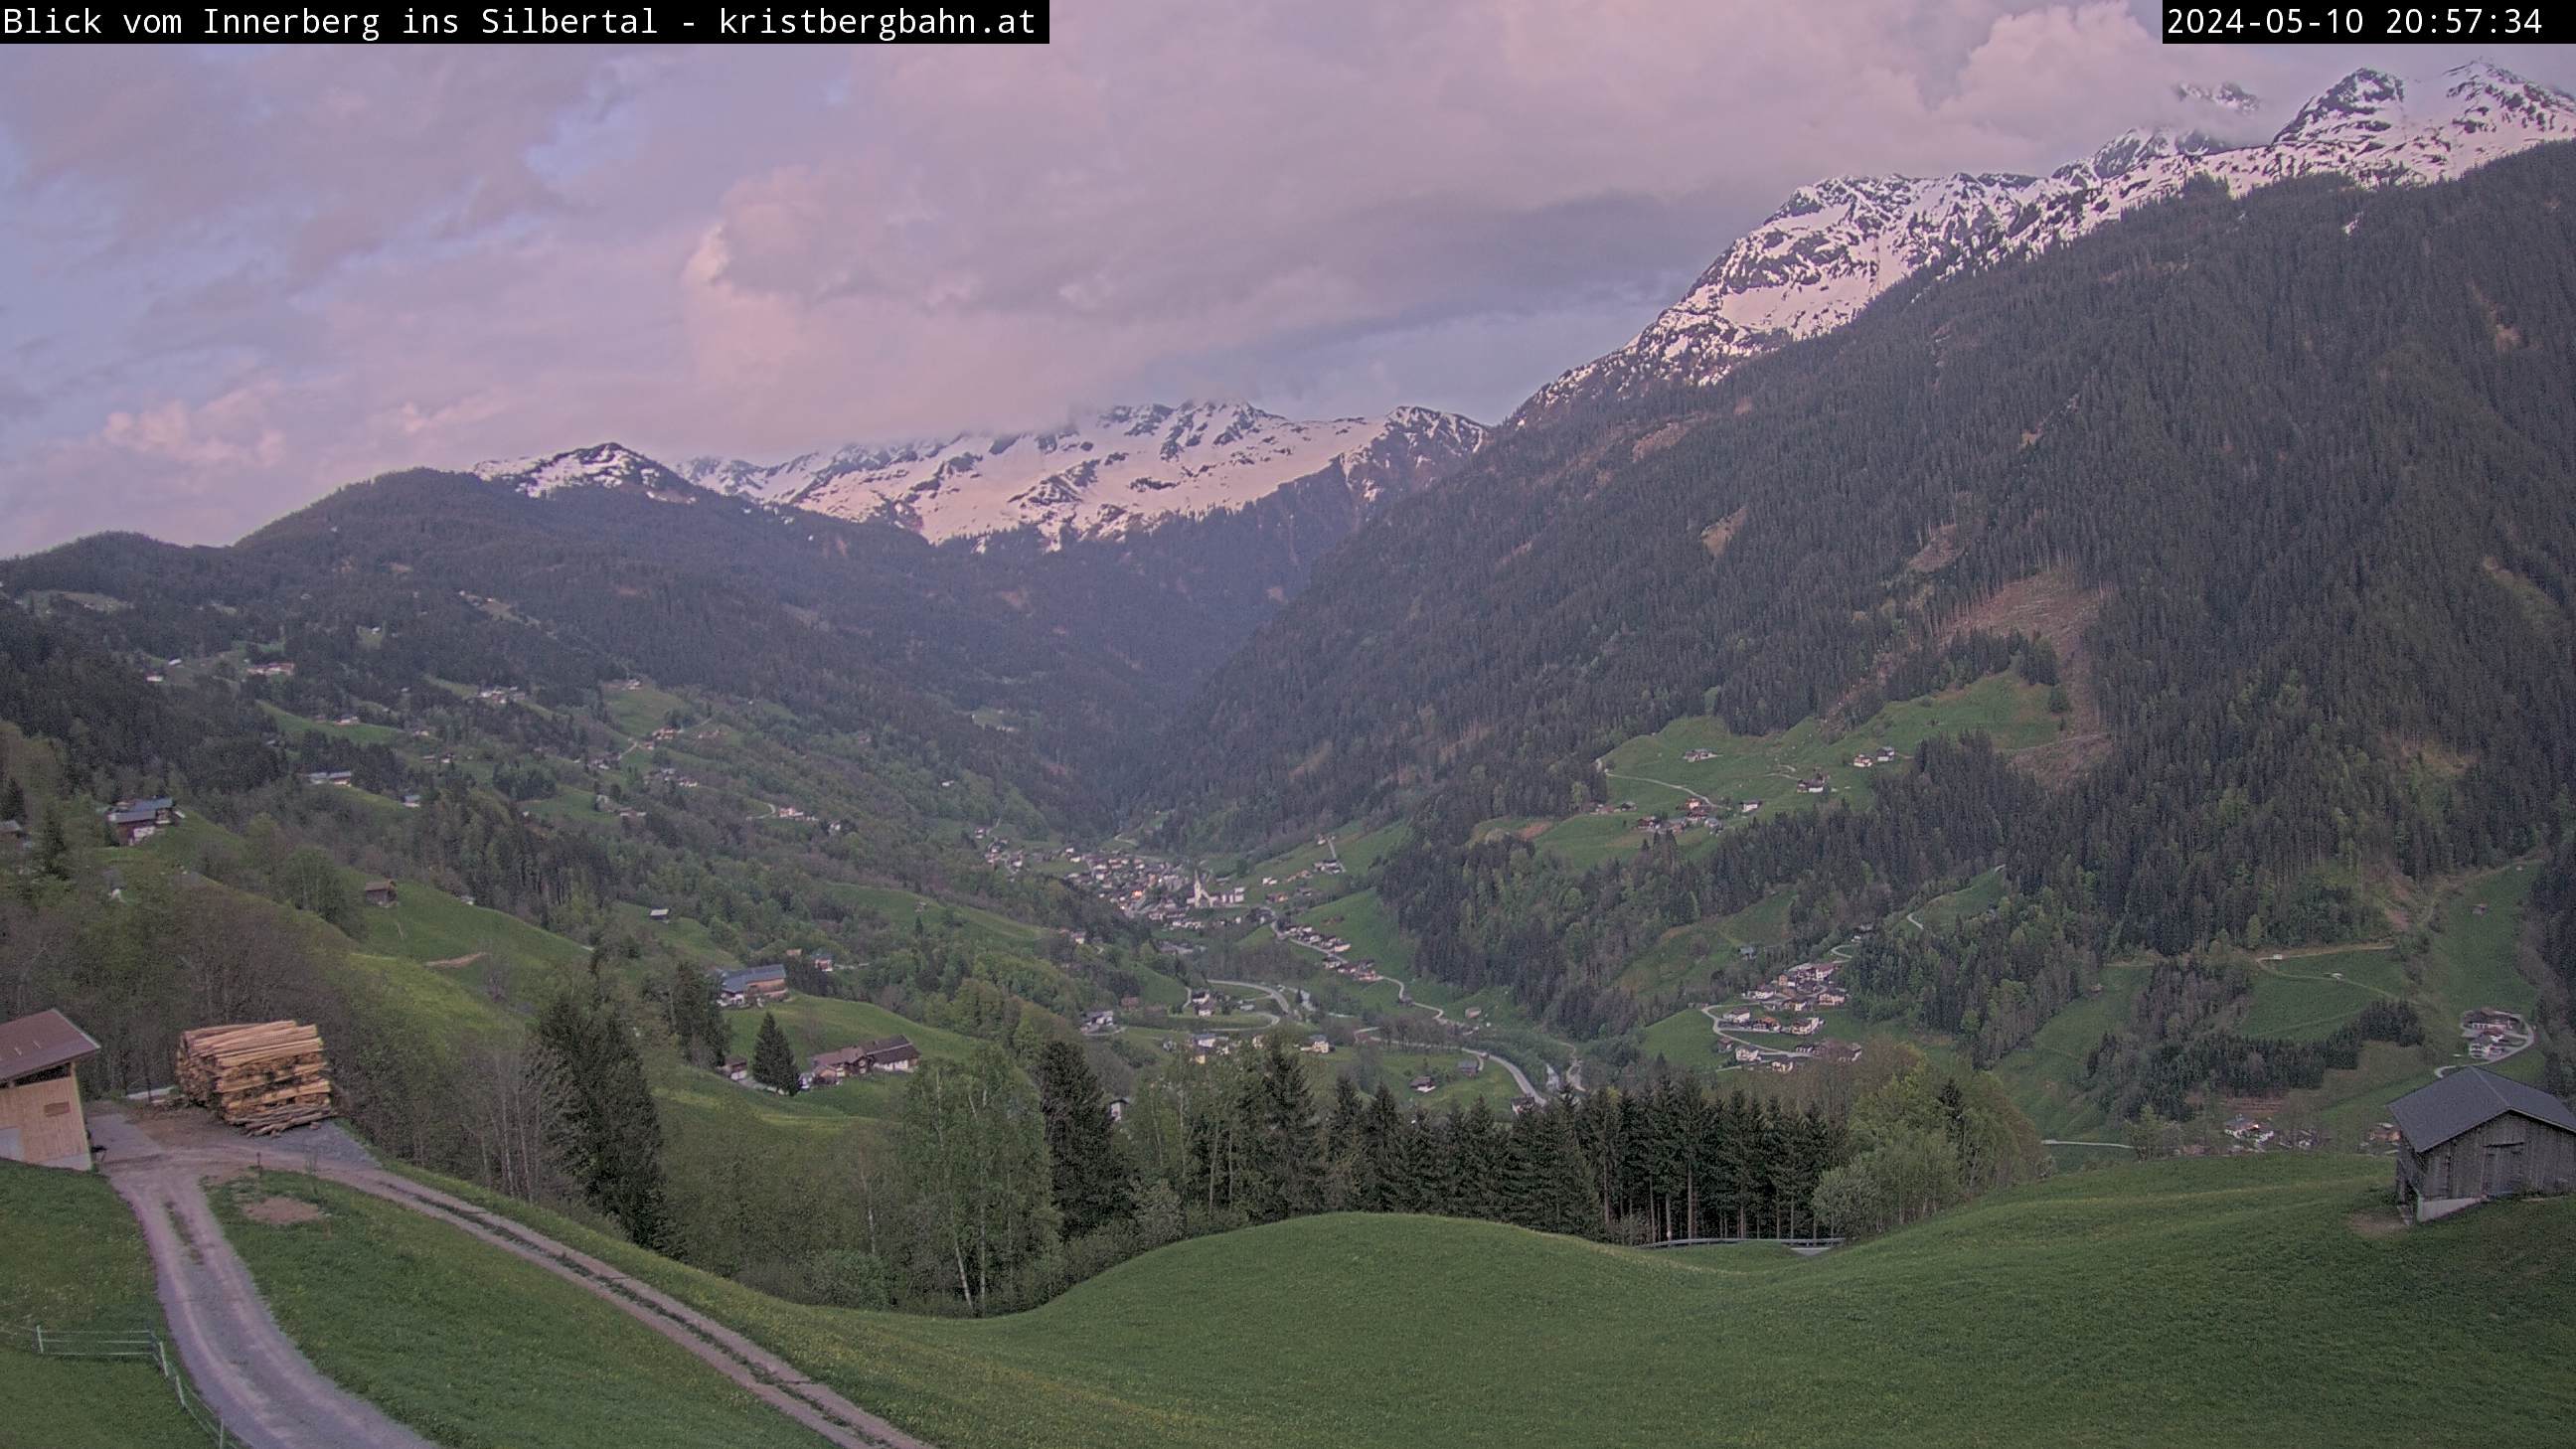 Webcam view from Innerberg towards Silbertal